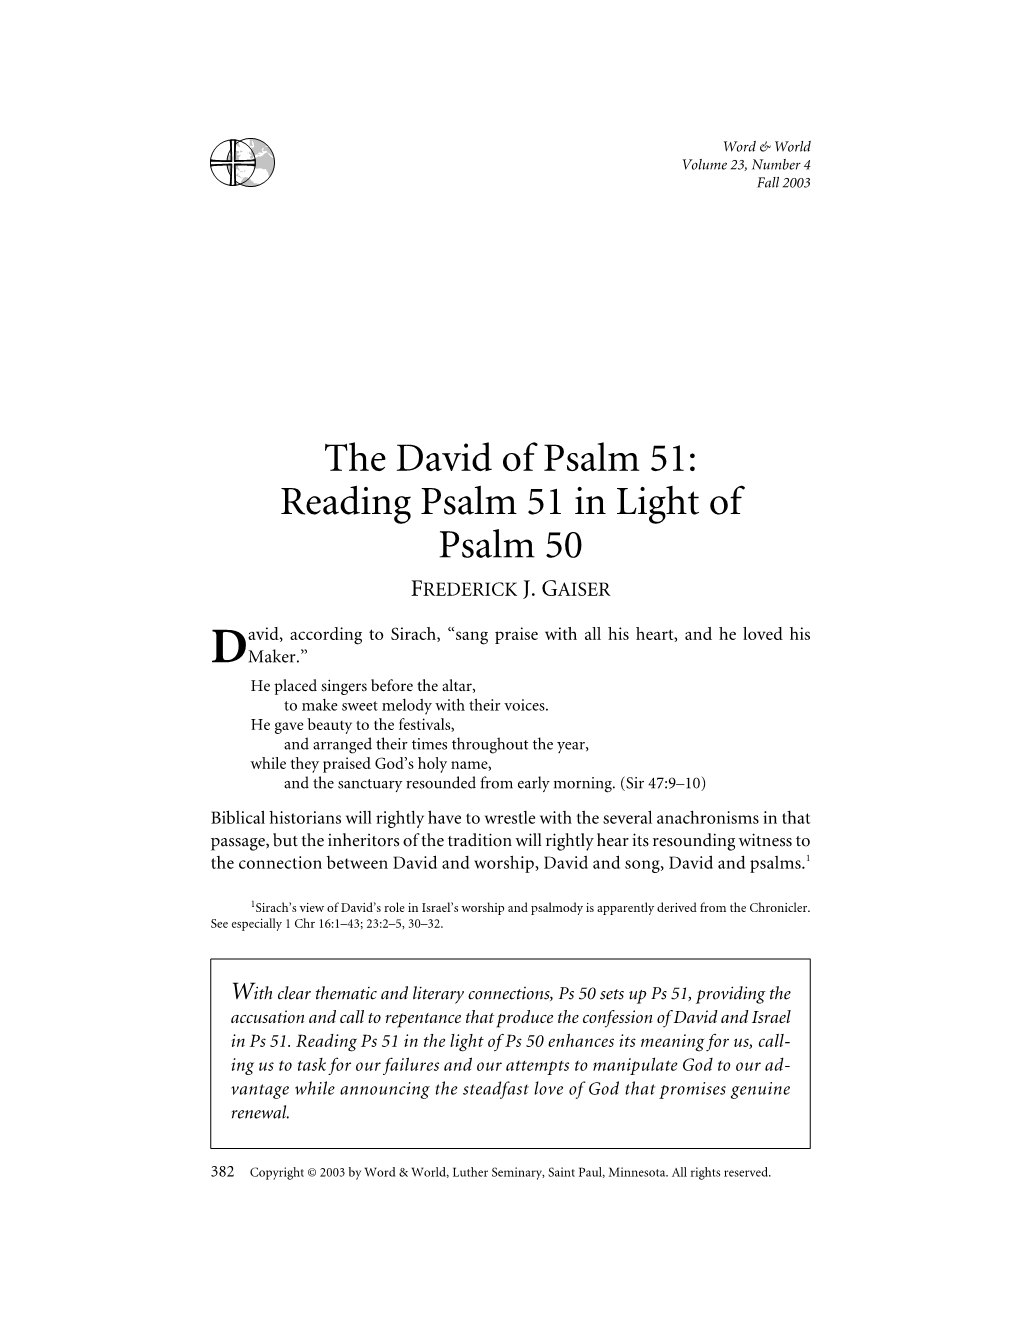 The David of Psalm 51: Reading Psalm 51 in Light of Psalm 50 FREDERICK J